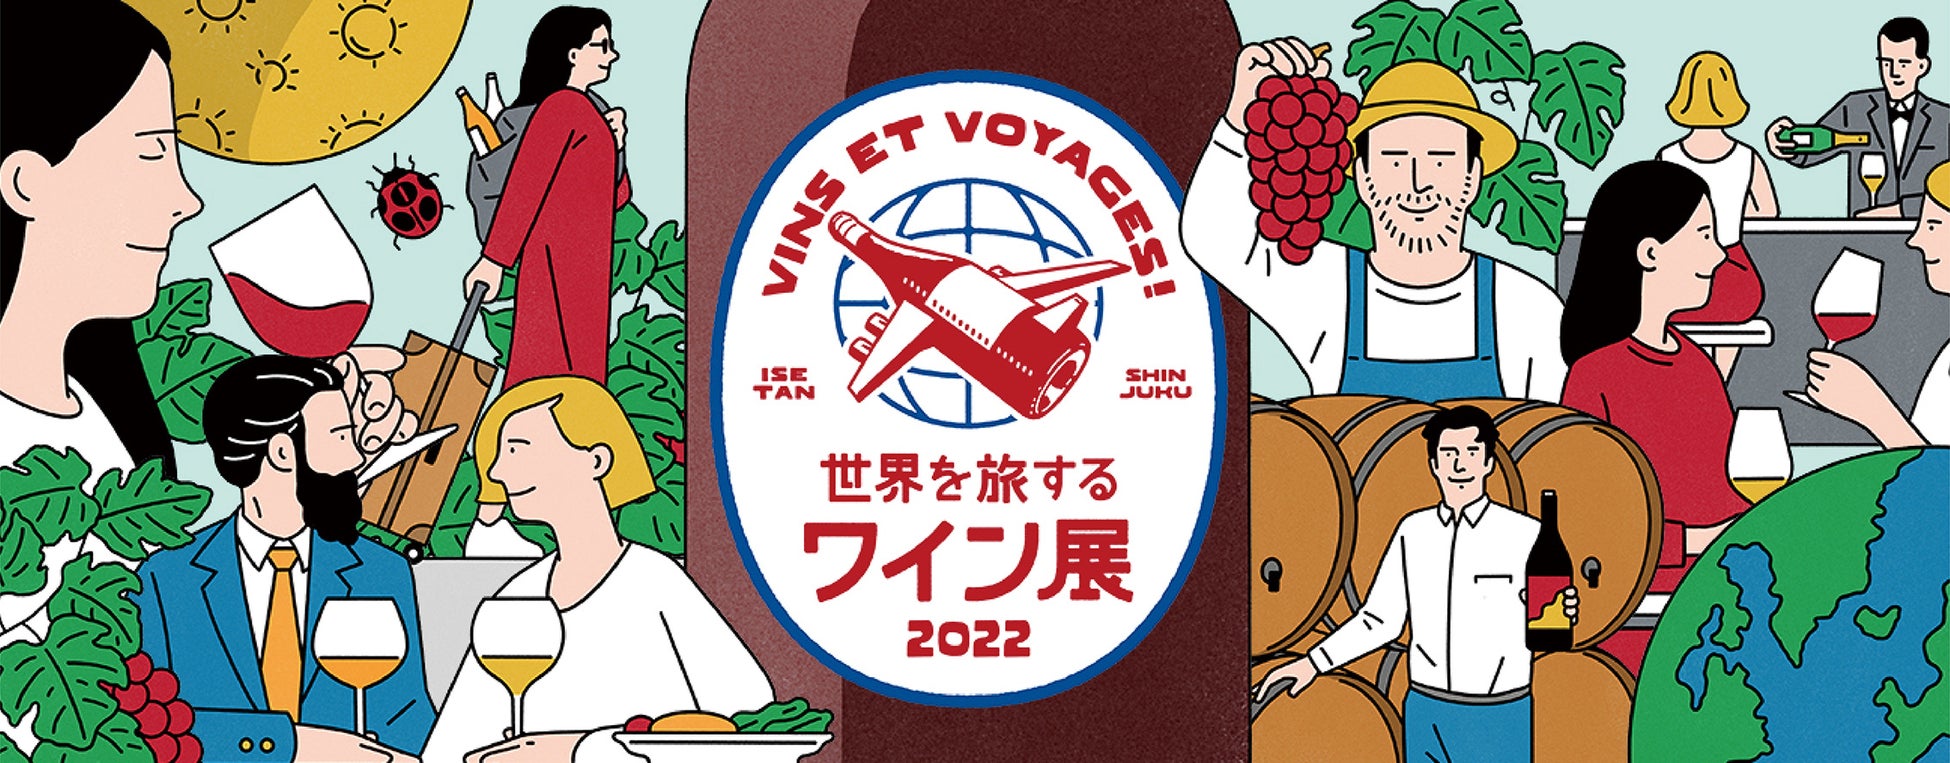 wa-syu OFFICIAL ONLINE SHOP初出展！「Vins et voyages！世界を旅するワイン展2022 」この夏、飲むよろこび、出会うたのしみを。のサブ画像1